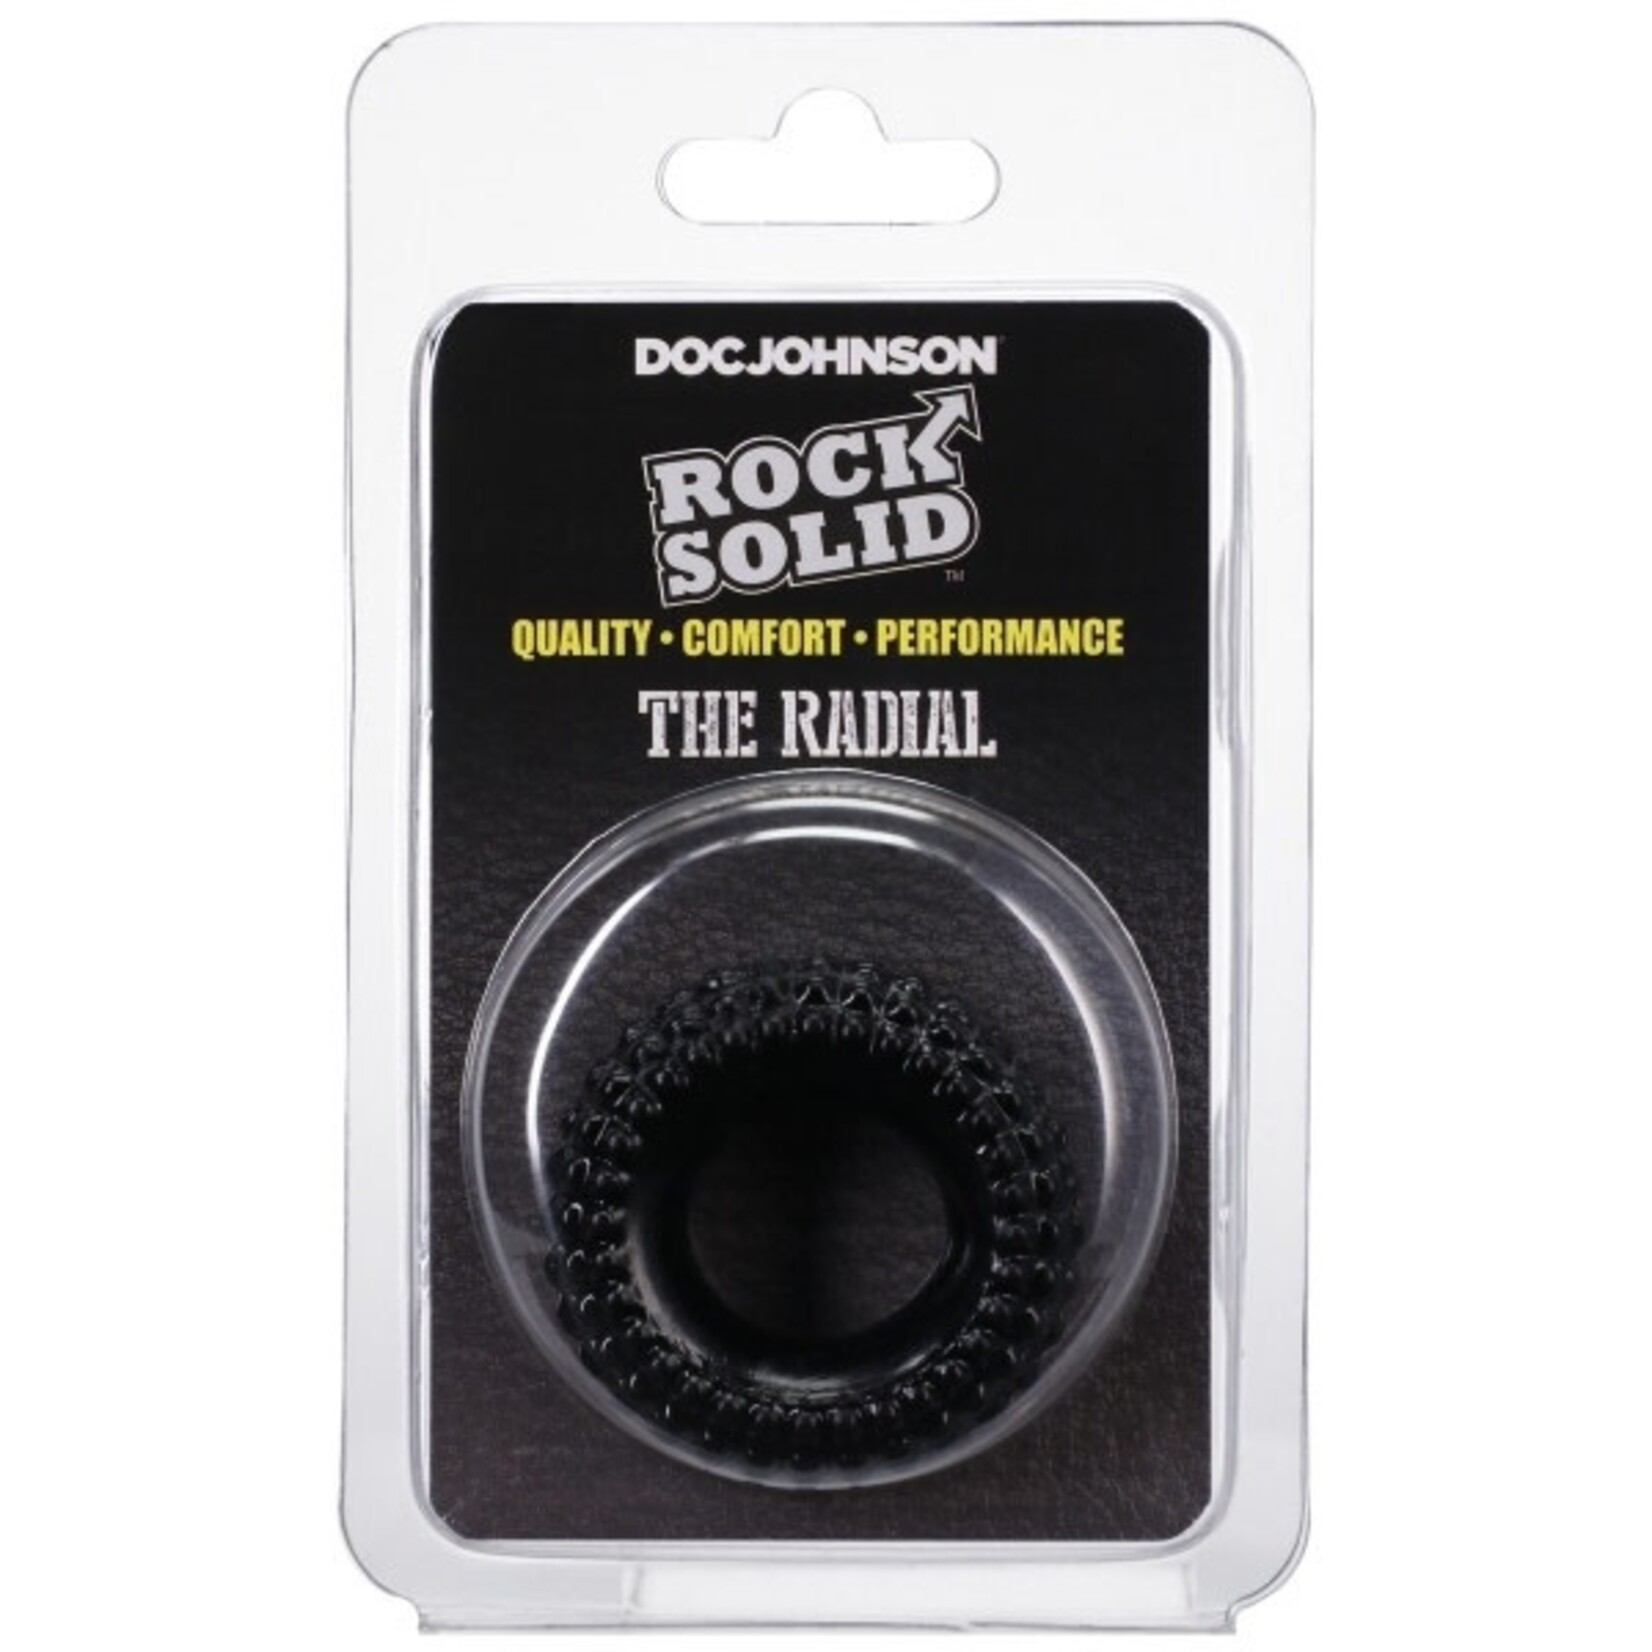 DOC JOHNSON ROCK SOLID - THE RADIAL BLACK